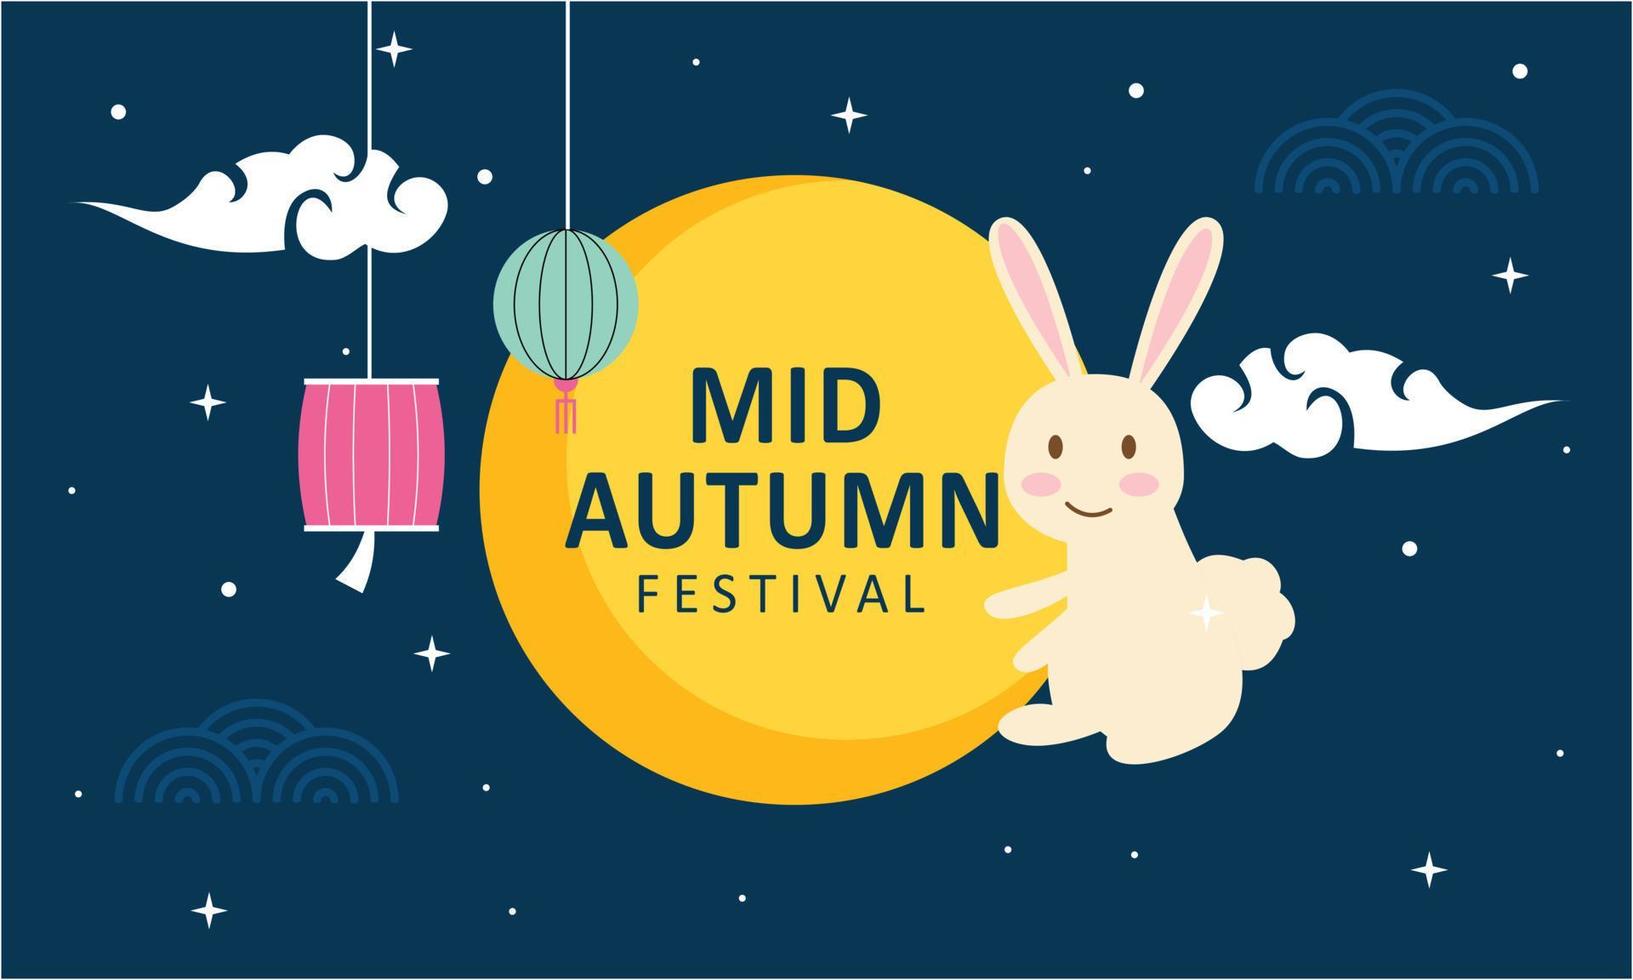 Mid autumn festival celebration illustration vector